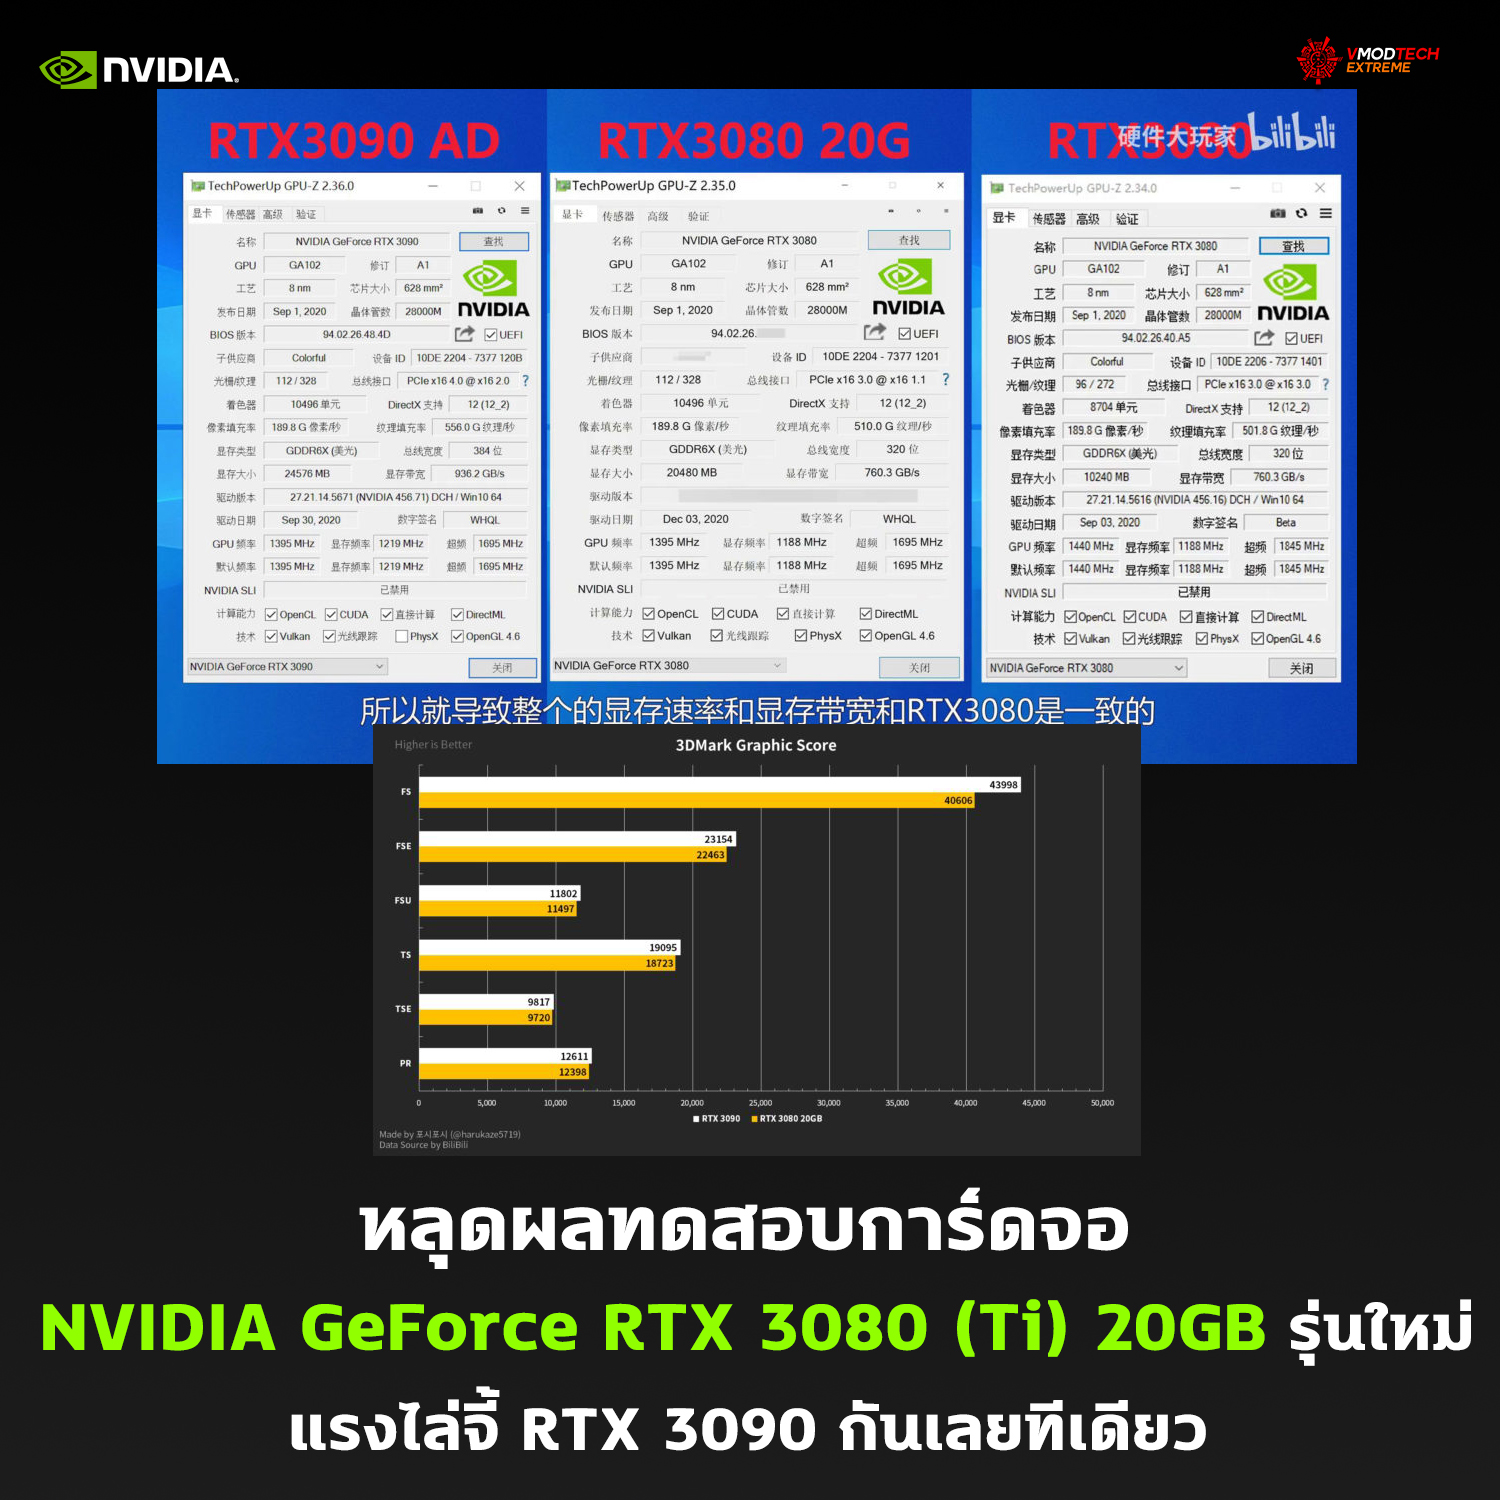 nvidia geforce rtx 3080 ti 20gb benchmark หลุดผลทดสอบการ์ดจอ NVIDIA GeForce RTX 3080 (Ti) 20GB รุ่นใหม่ล่าสุดแรงไล่จี้ RTX 3090 กันเลยทีเดียว 